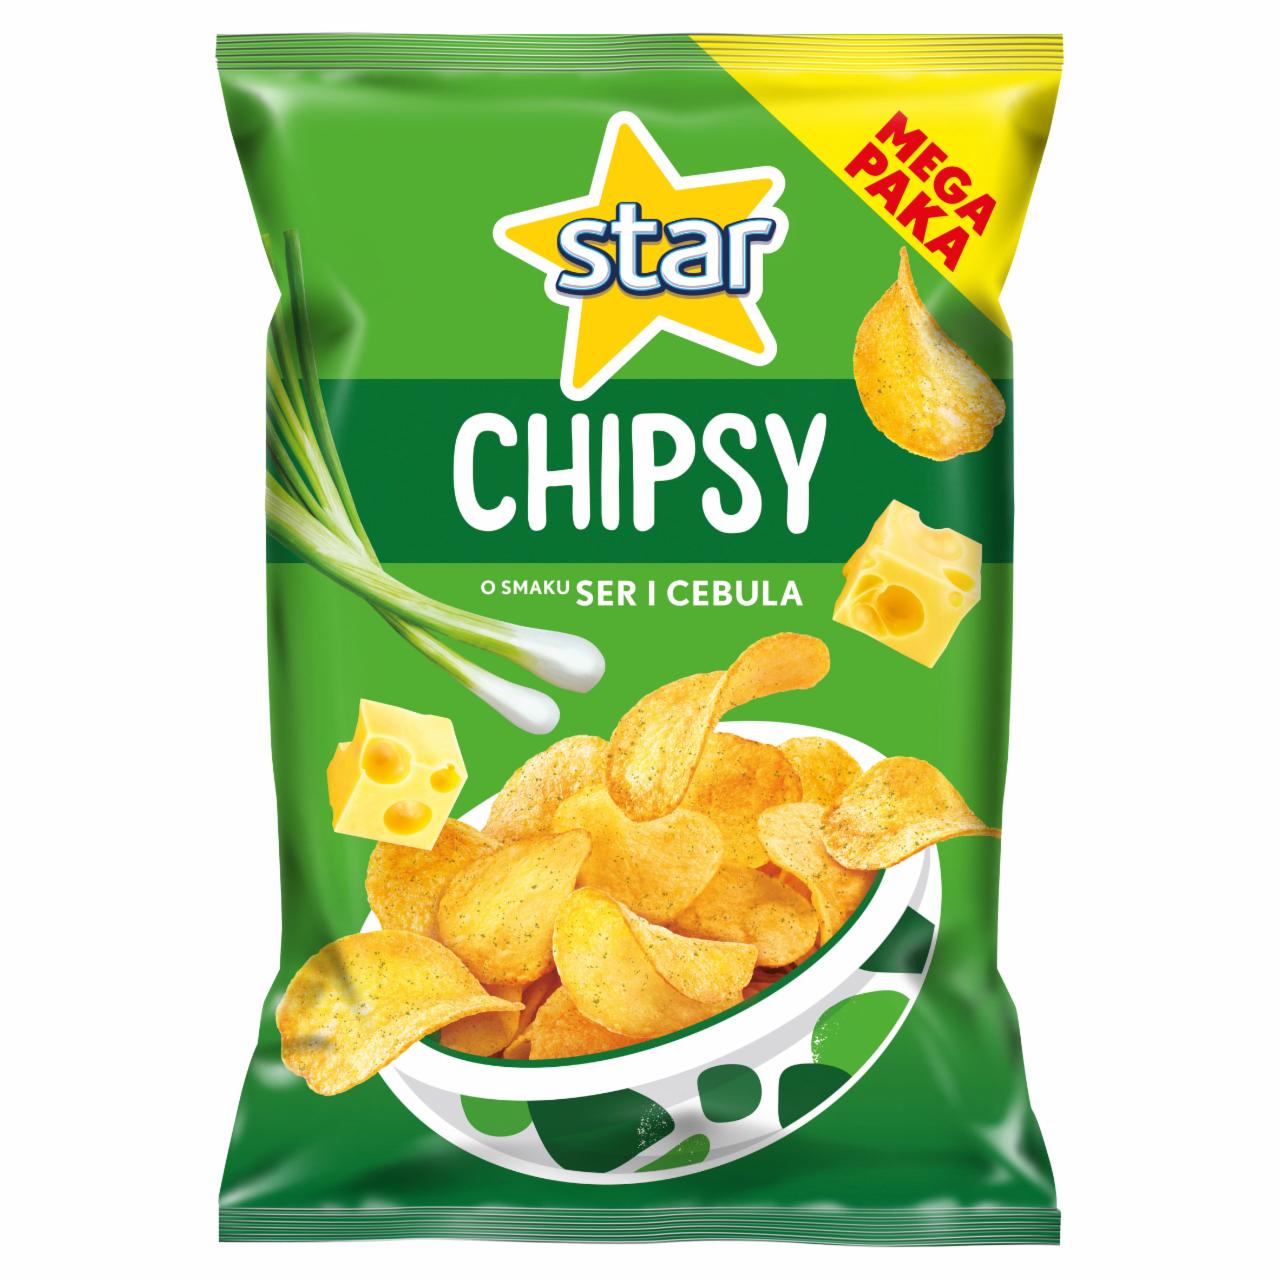 Zdjęcia - Star Chipsy o smaku ser i cebula 220 g